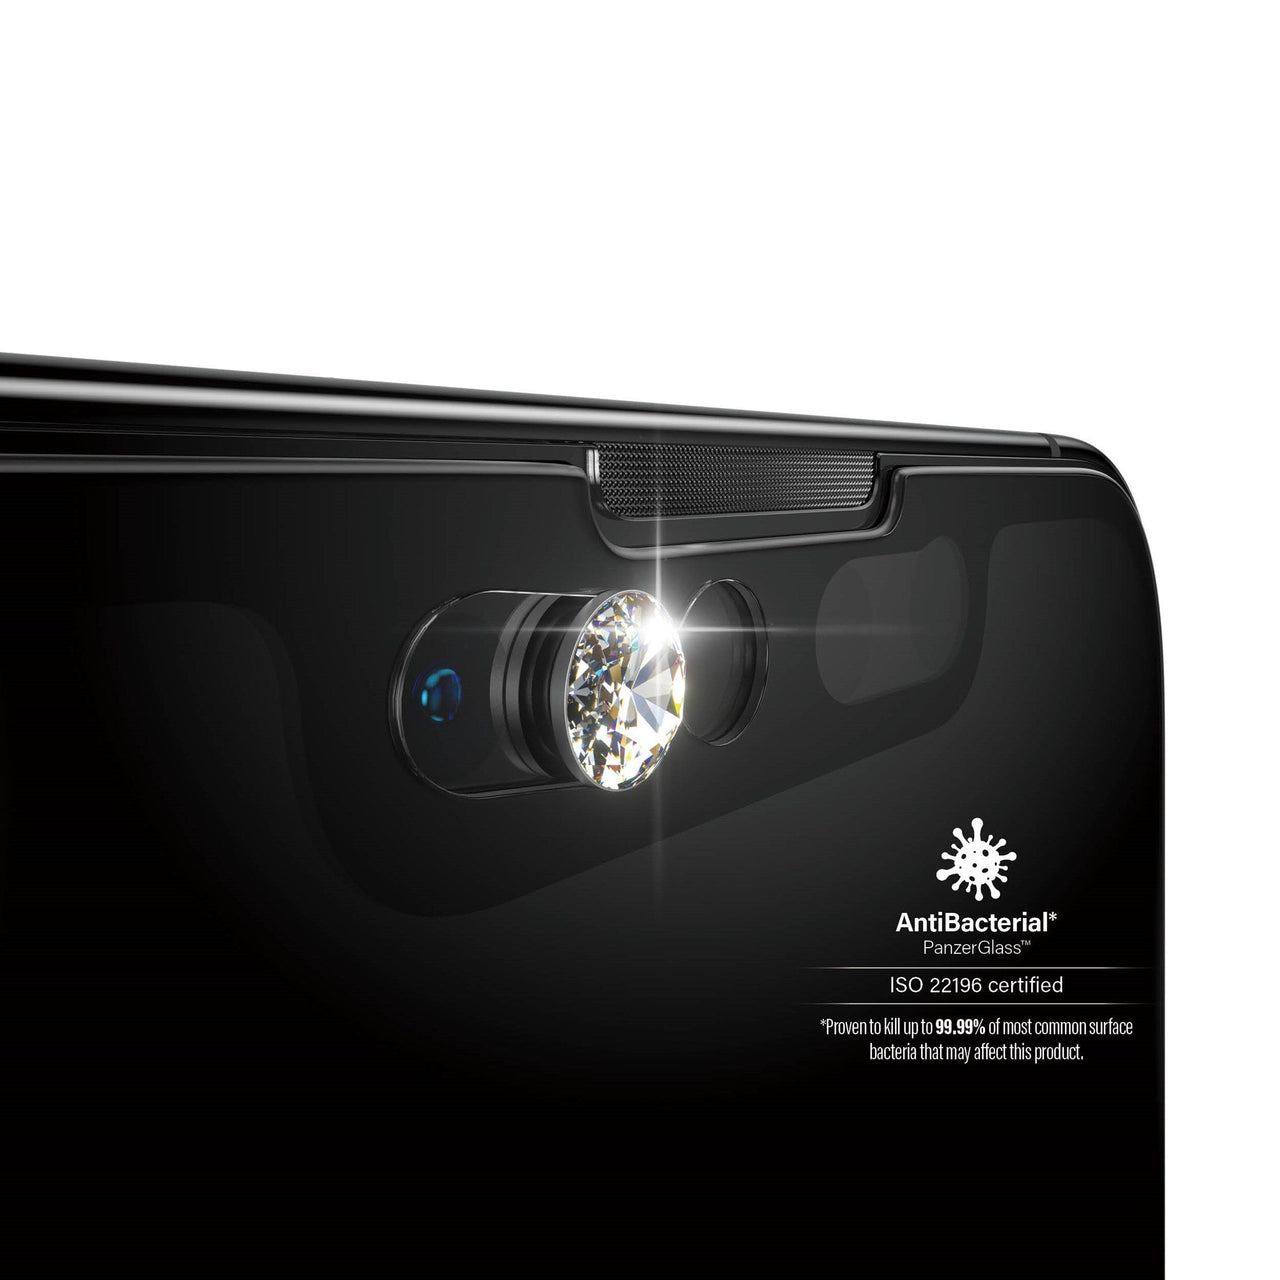 Panzer Glass CamSlider Embellished with Swarovski Crystal for iPhone 13 Pro Max - Black